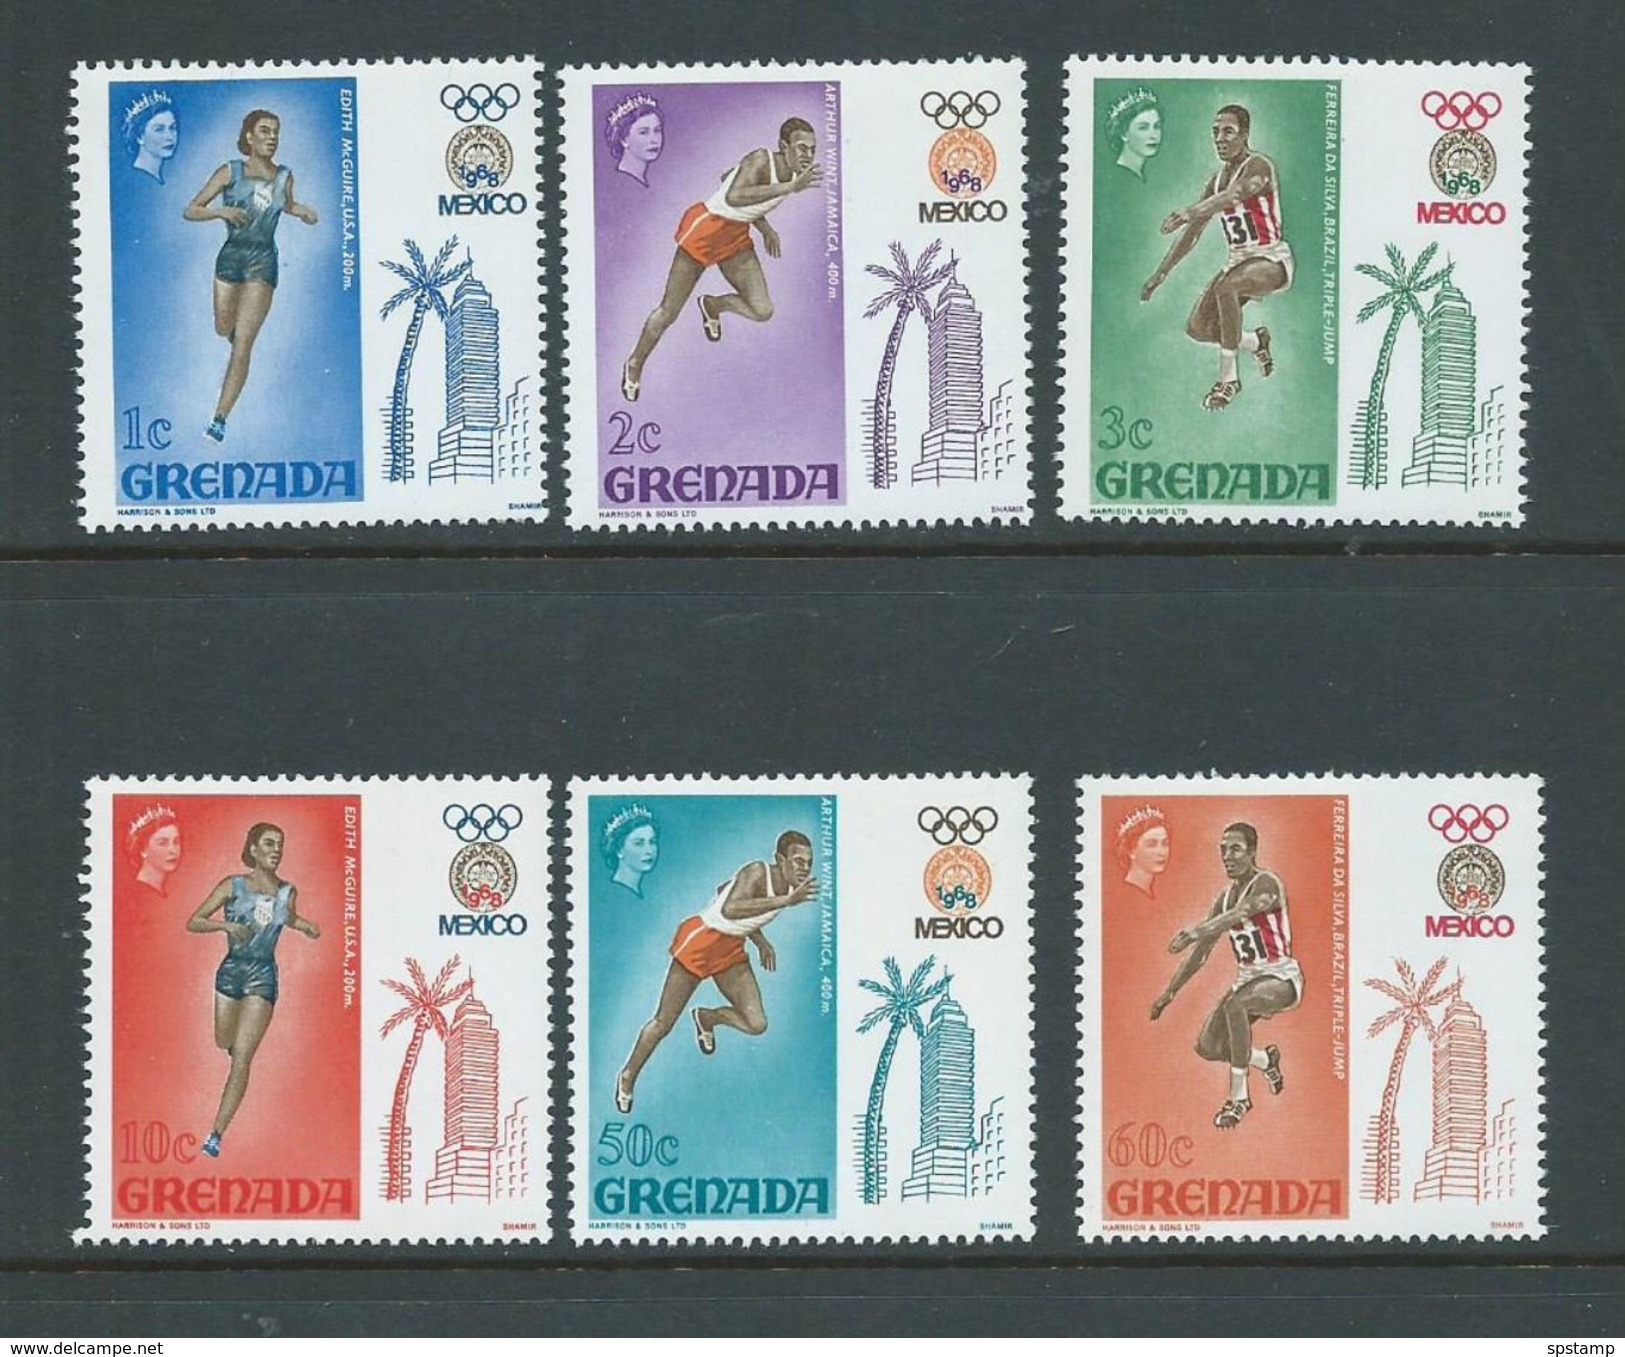 Grenada 1968 Mexico Olympic Games Set Of 6 MNH - Grenada (...-1974)